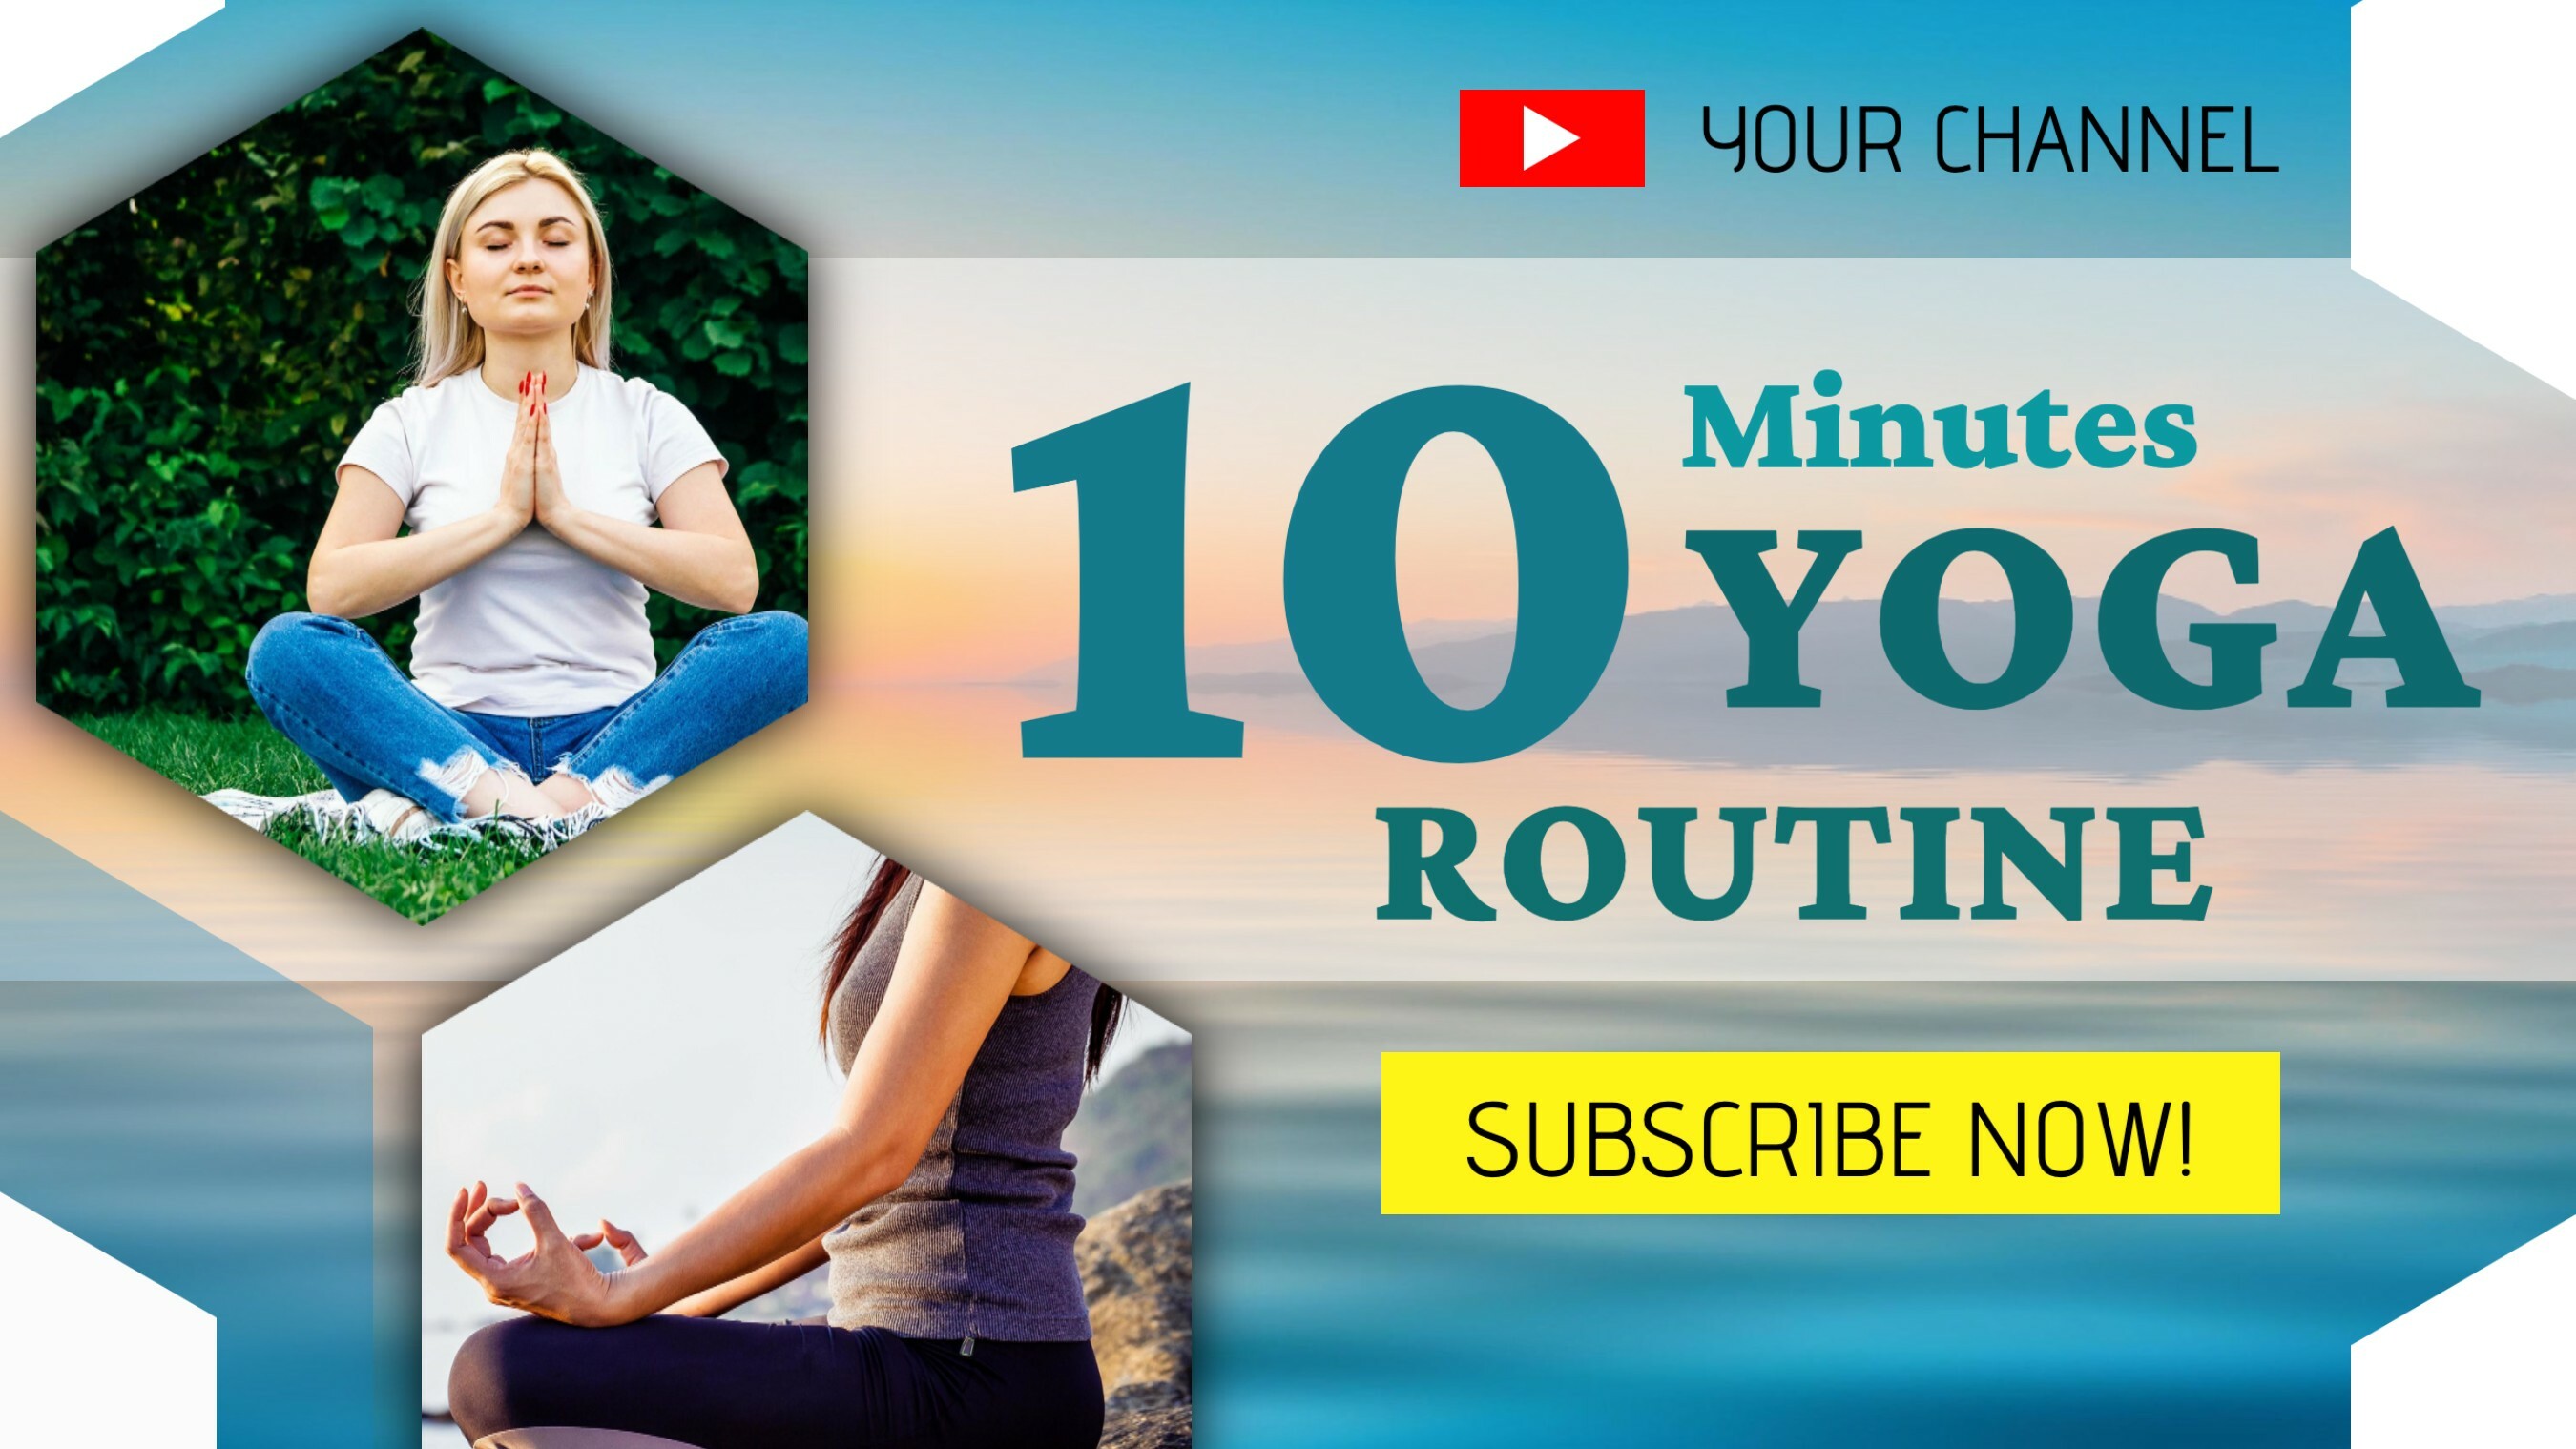 Ten Minutes Yoga template